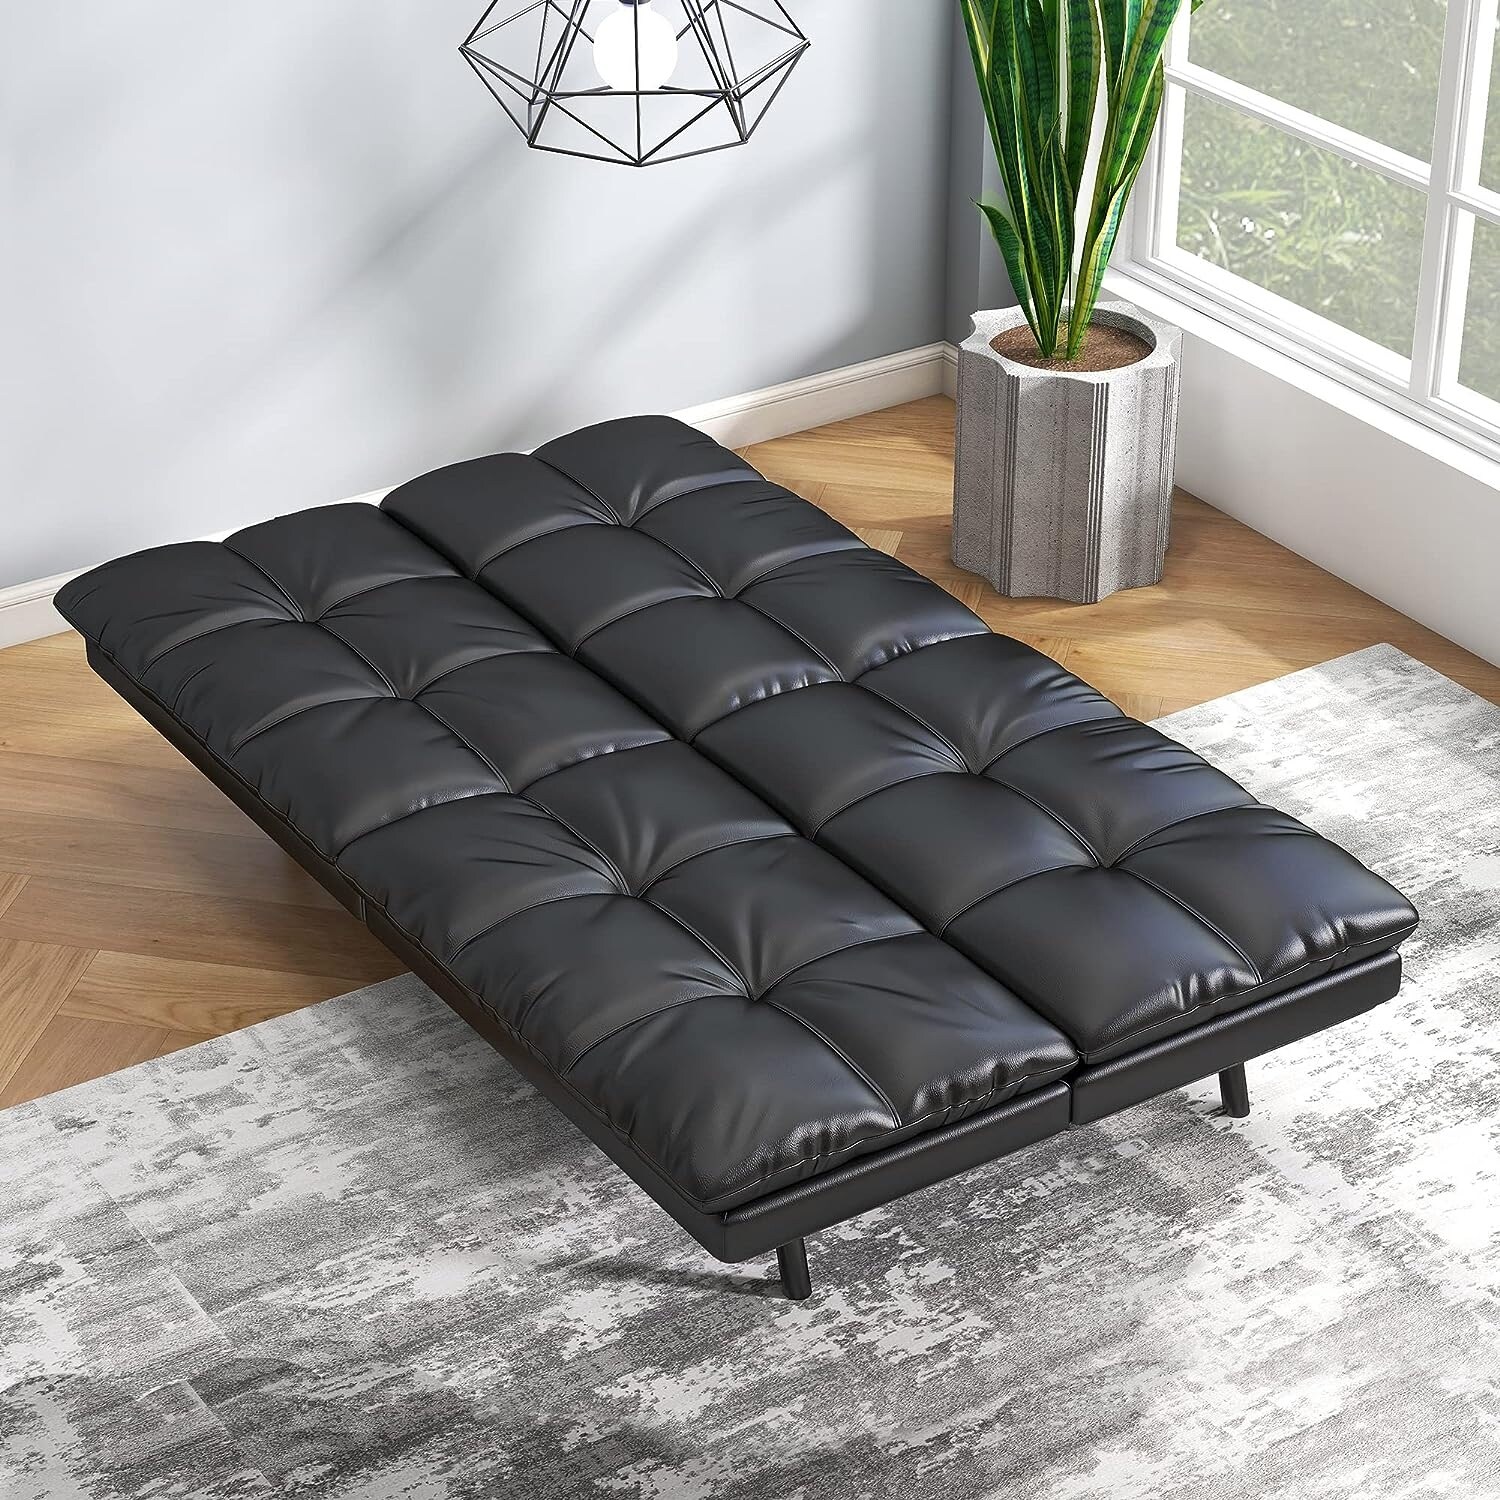 Milmonet Futon Sofa Bed, Linen Fabric Memory Foam Couch,Modern